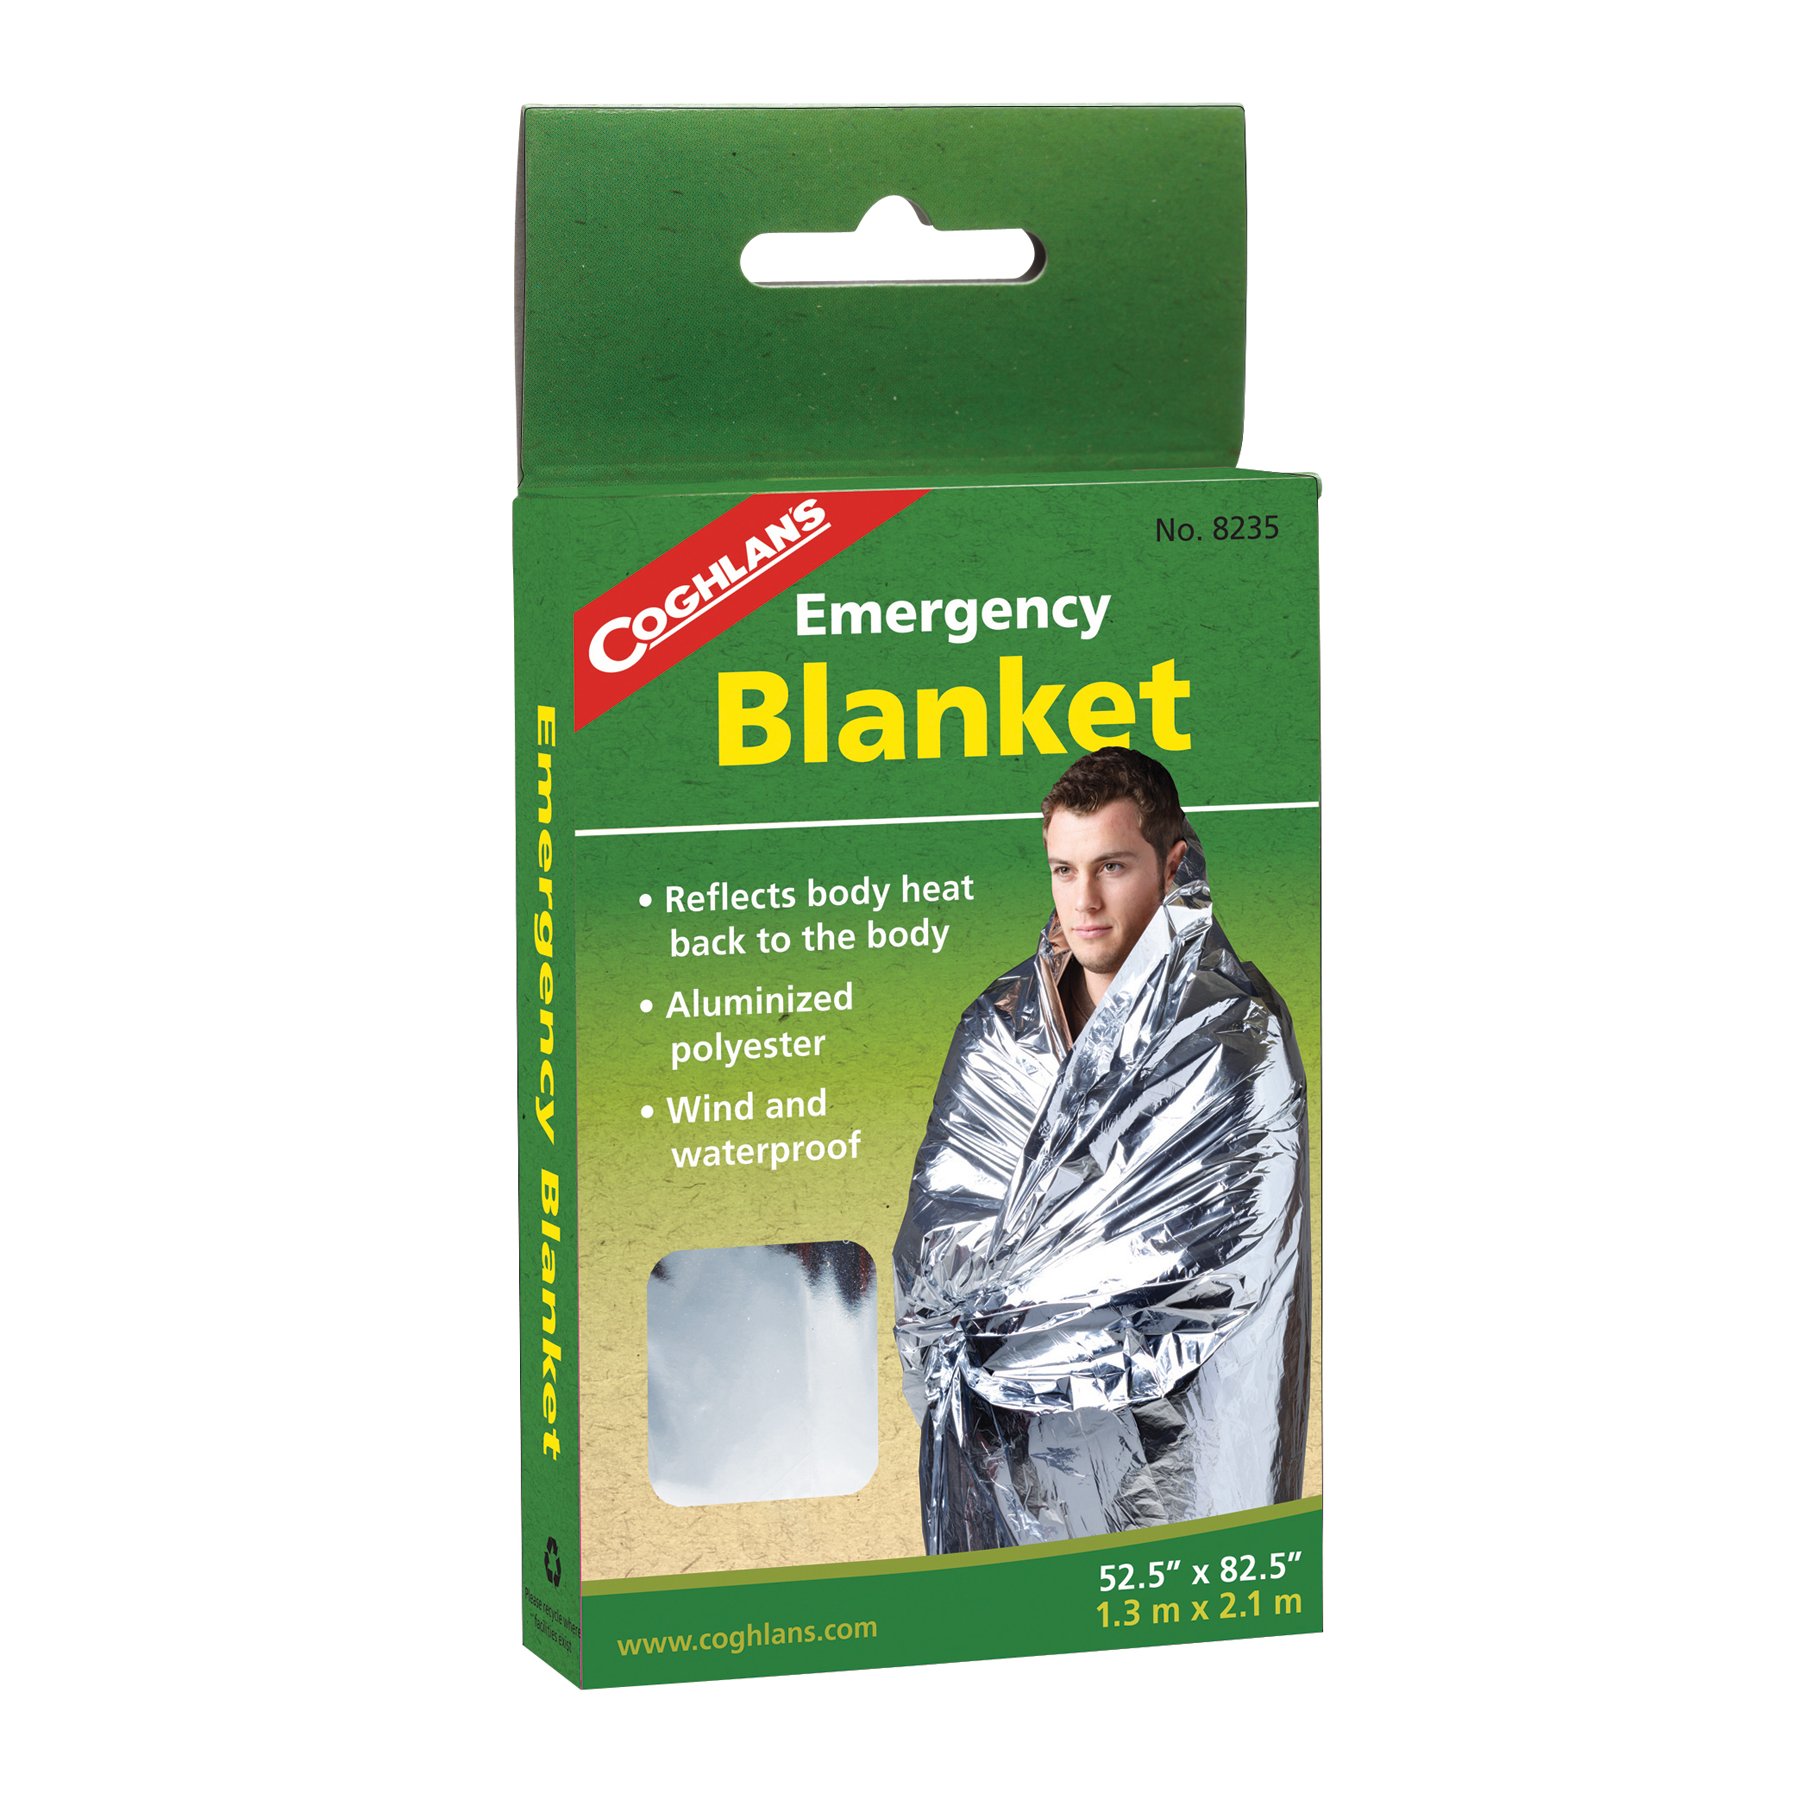 Coghlan ft s Emergency Blanket 8235